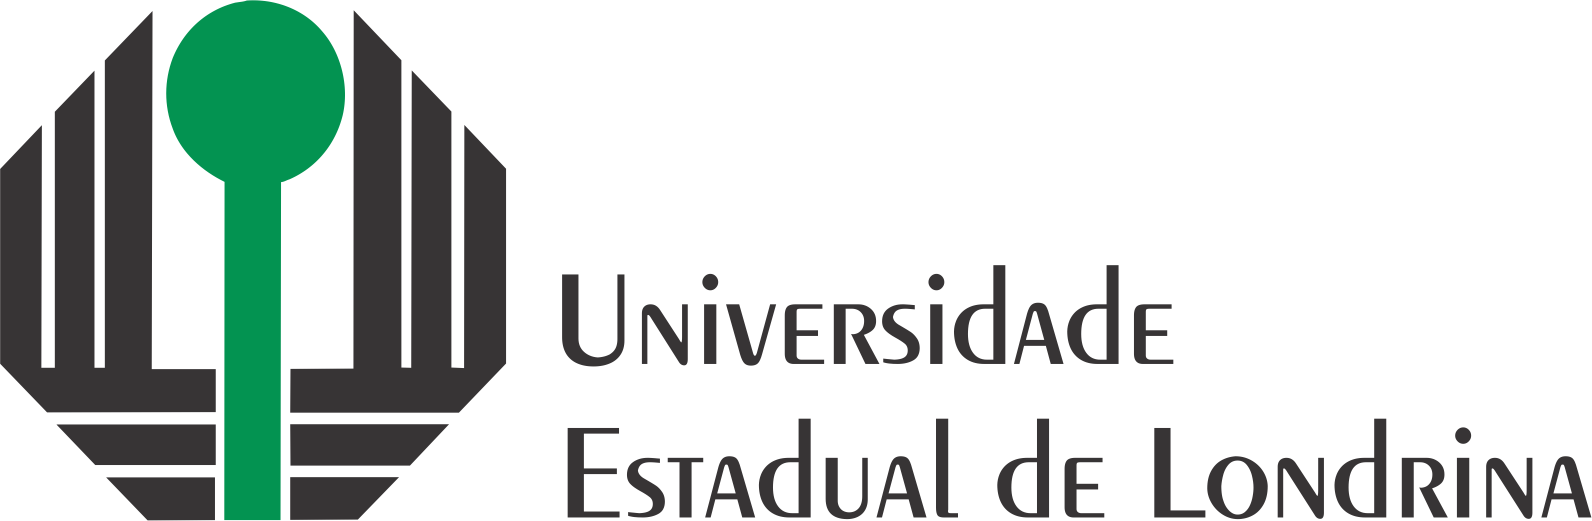 Universidade Estadual de Londrina Logo photo - 1